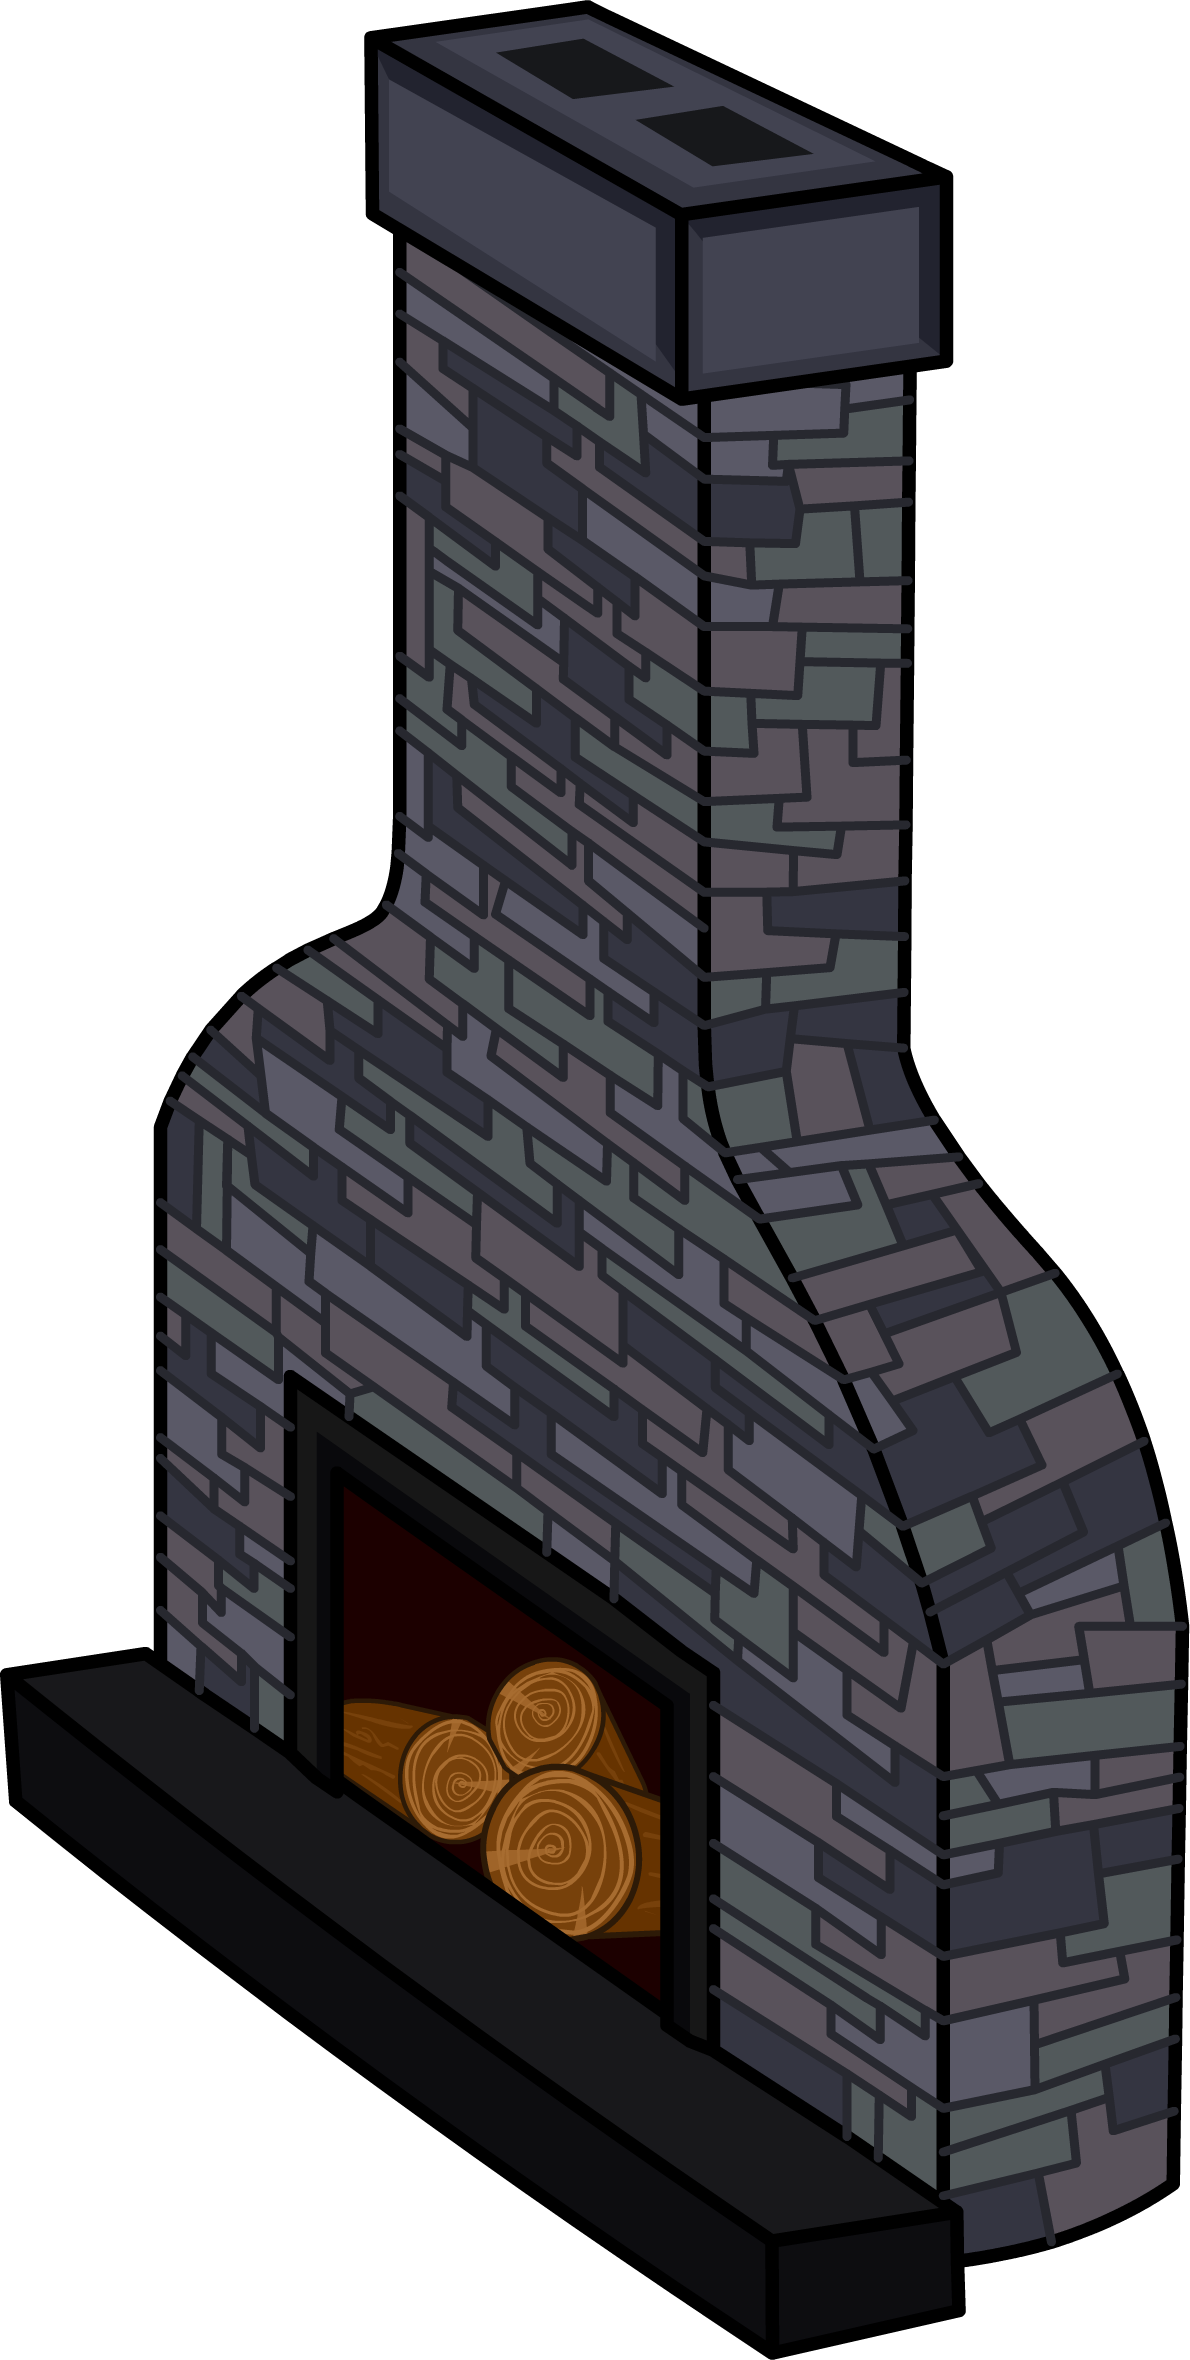 fireplace clipart cozy fireplace